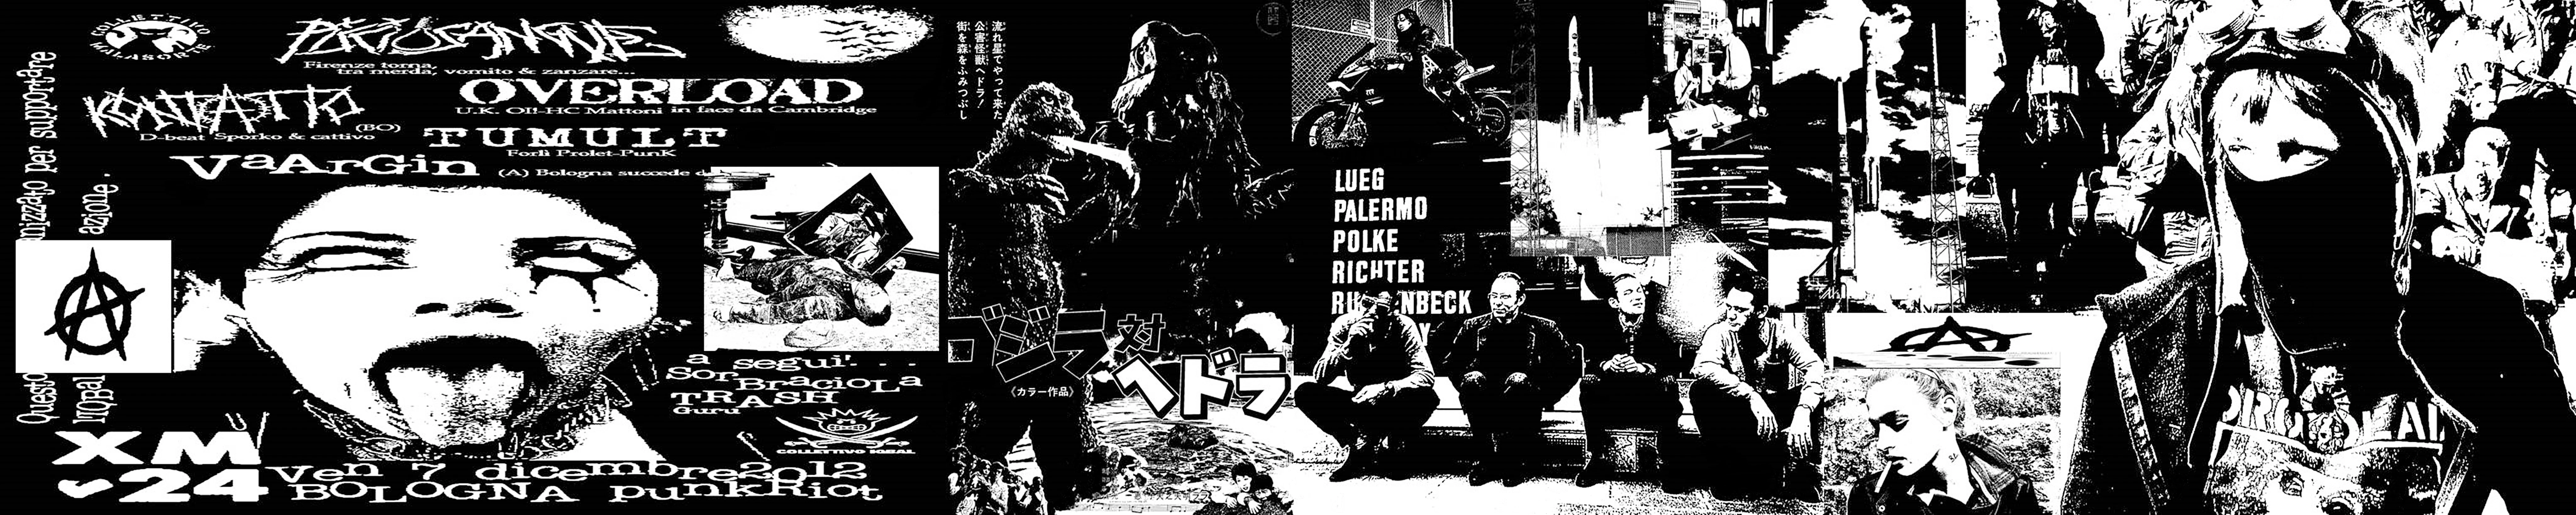 Konrad Lueg  Sigmar Polke  Blinky Palermo and Gerhard Richter  vs  GODZILLA